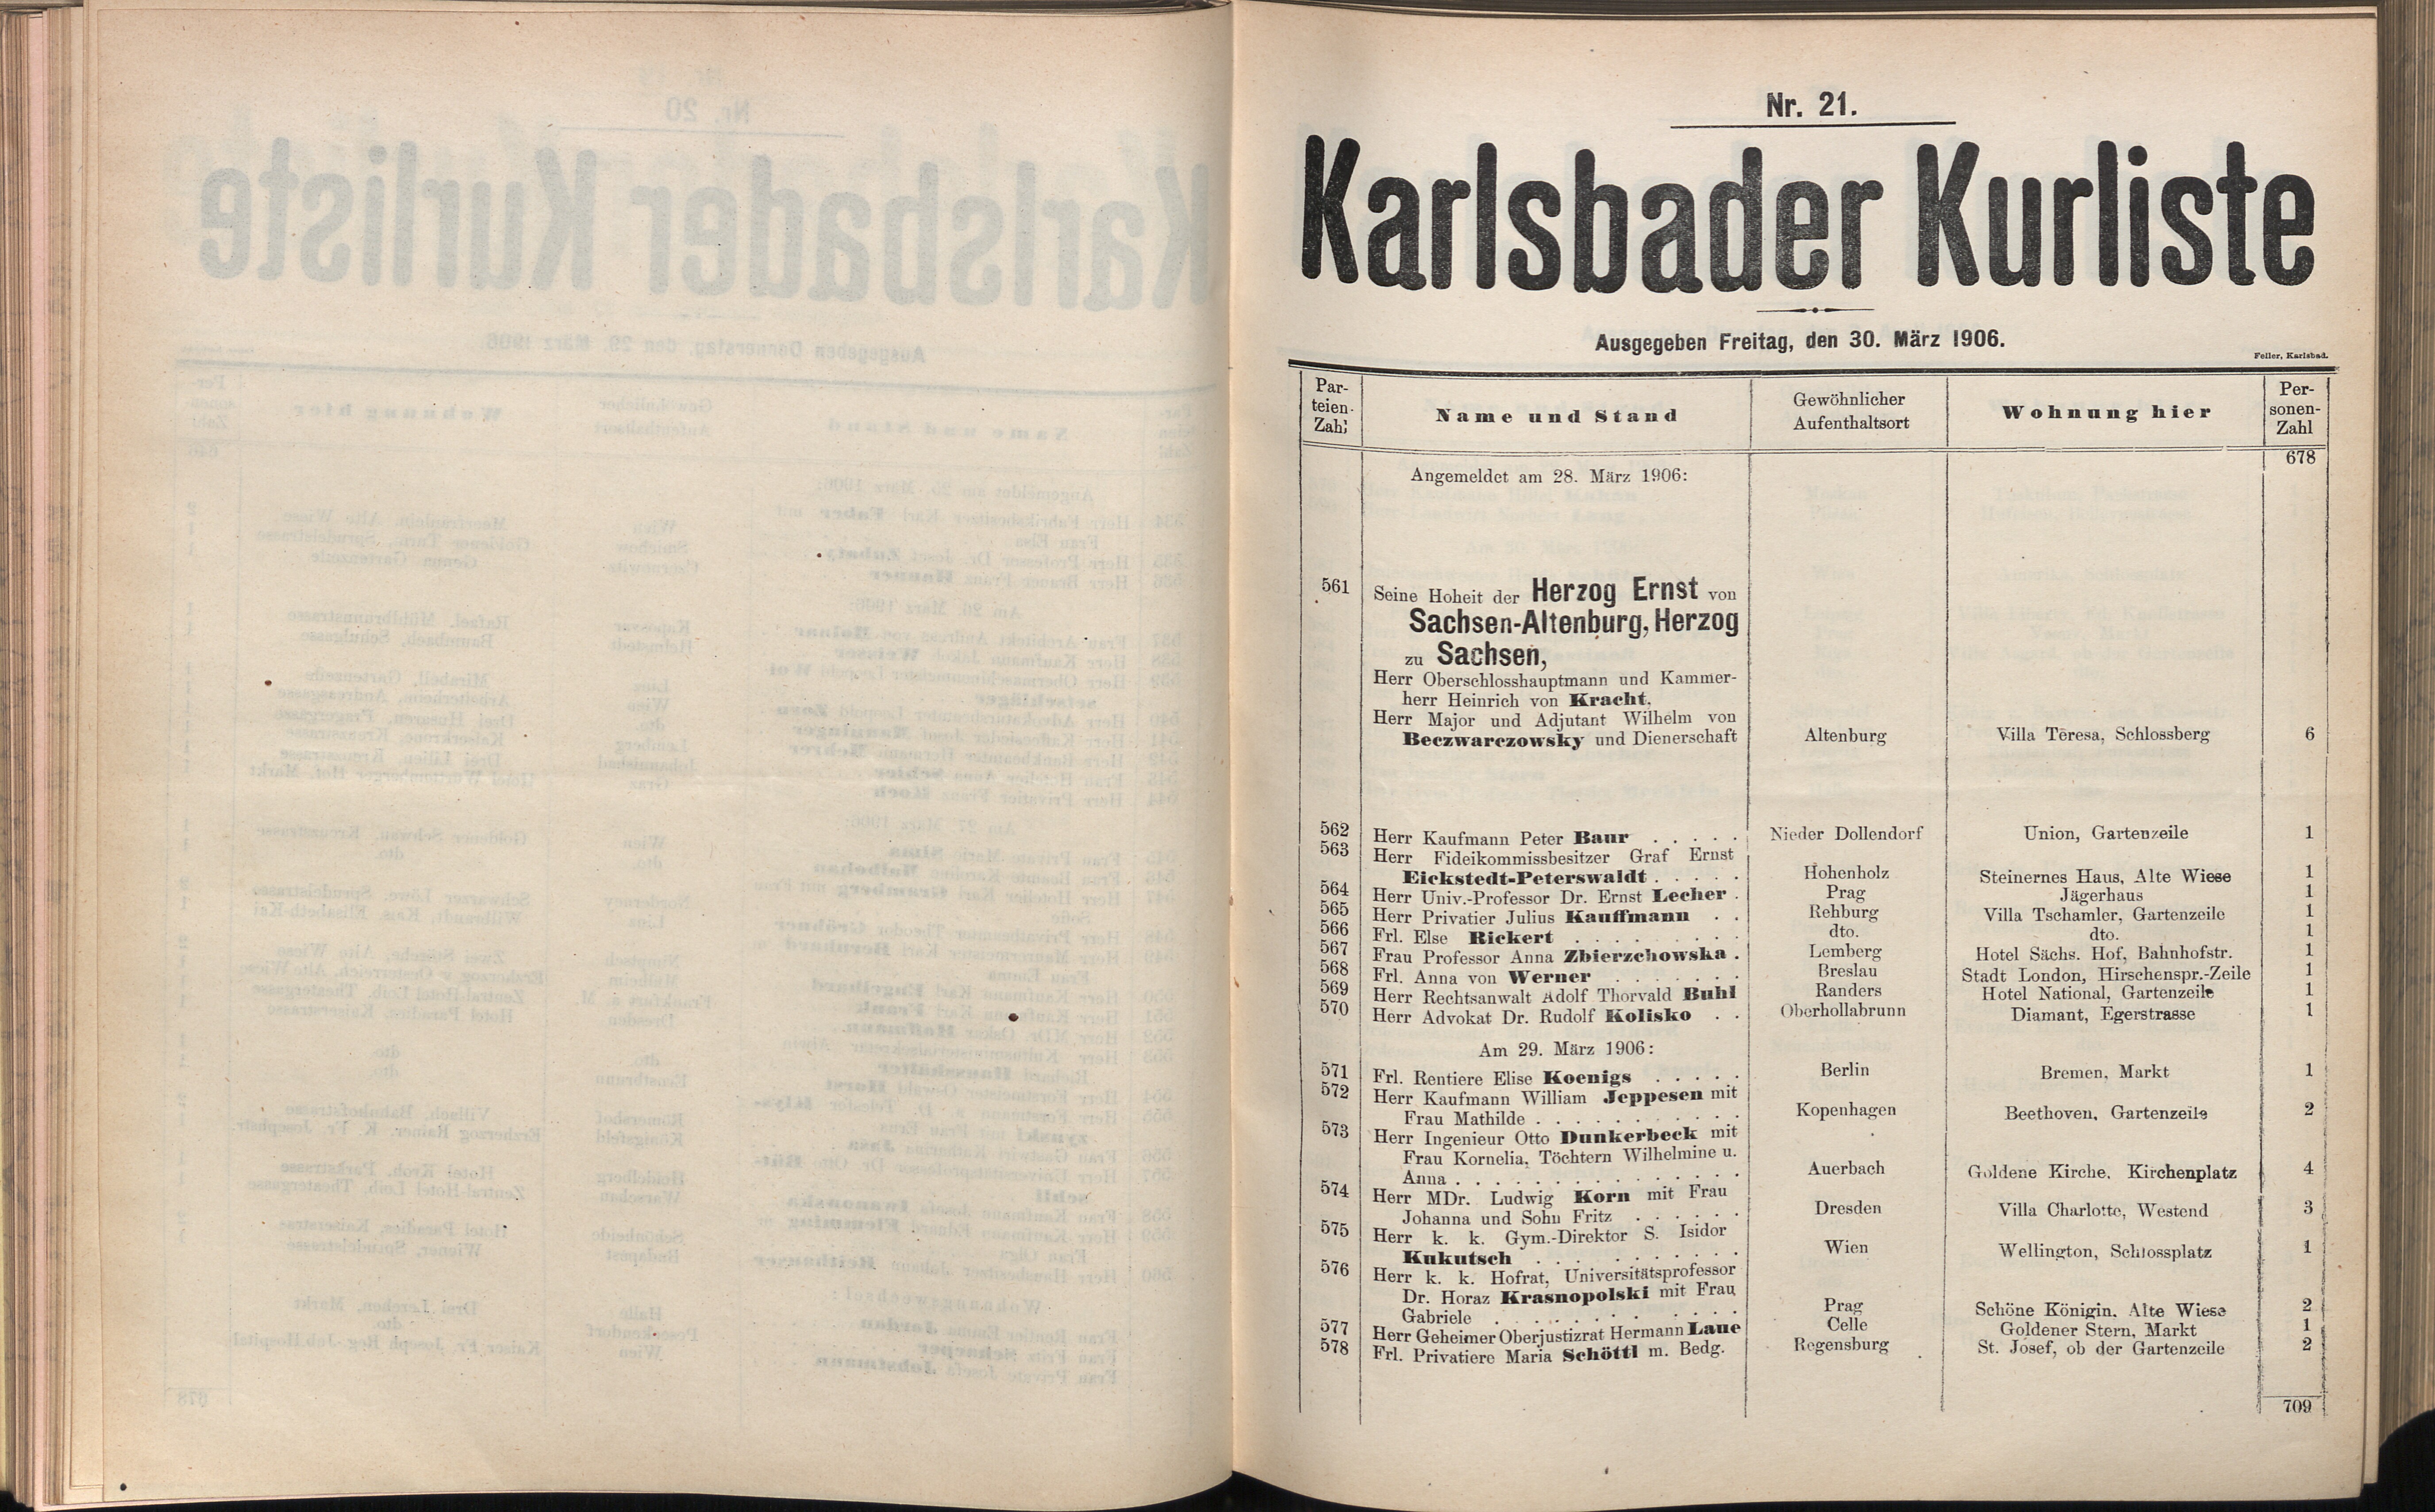 134. soap-kv_knihovna_karlsbader-kurliste-1906_1350